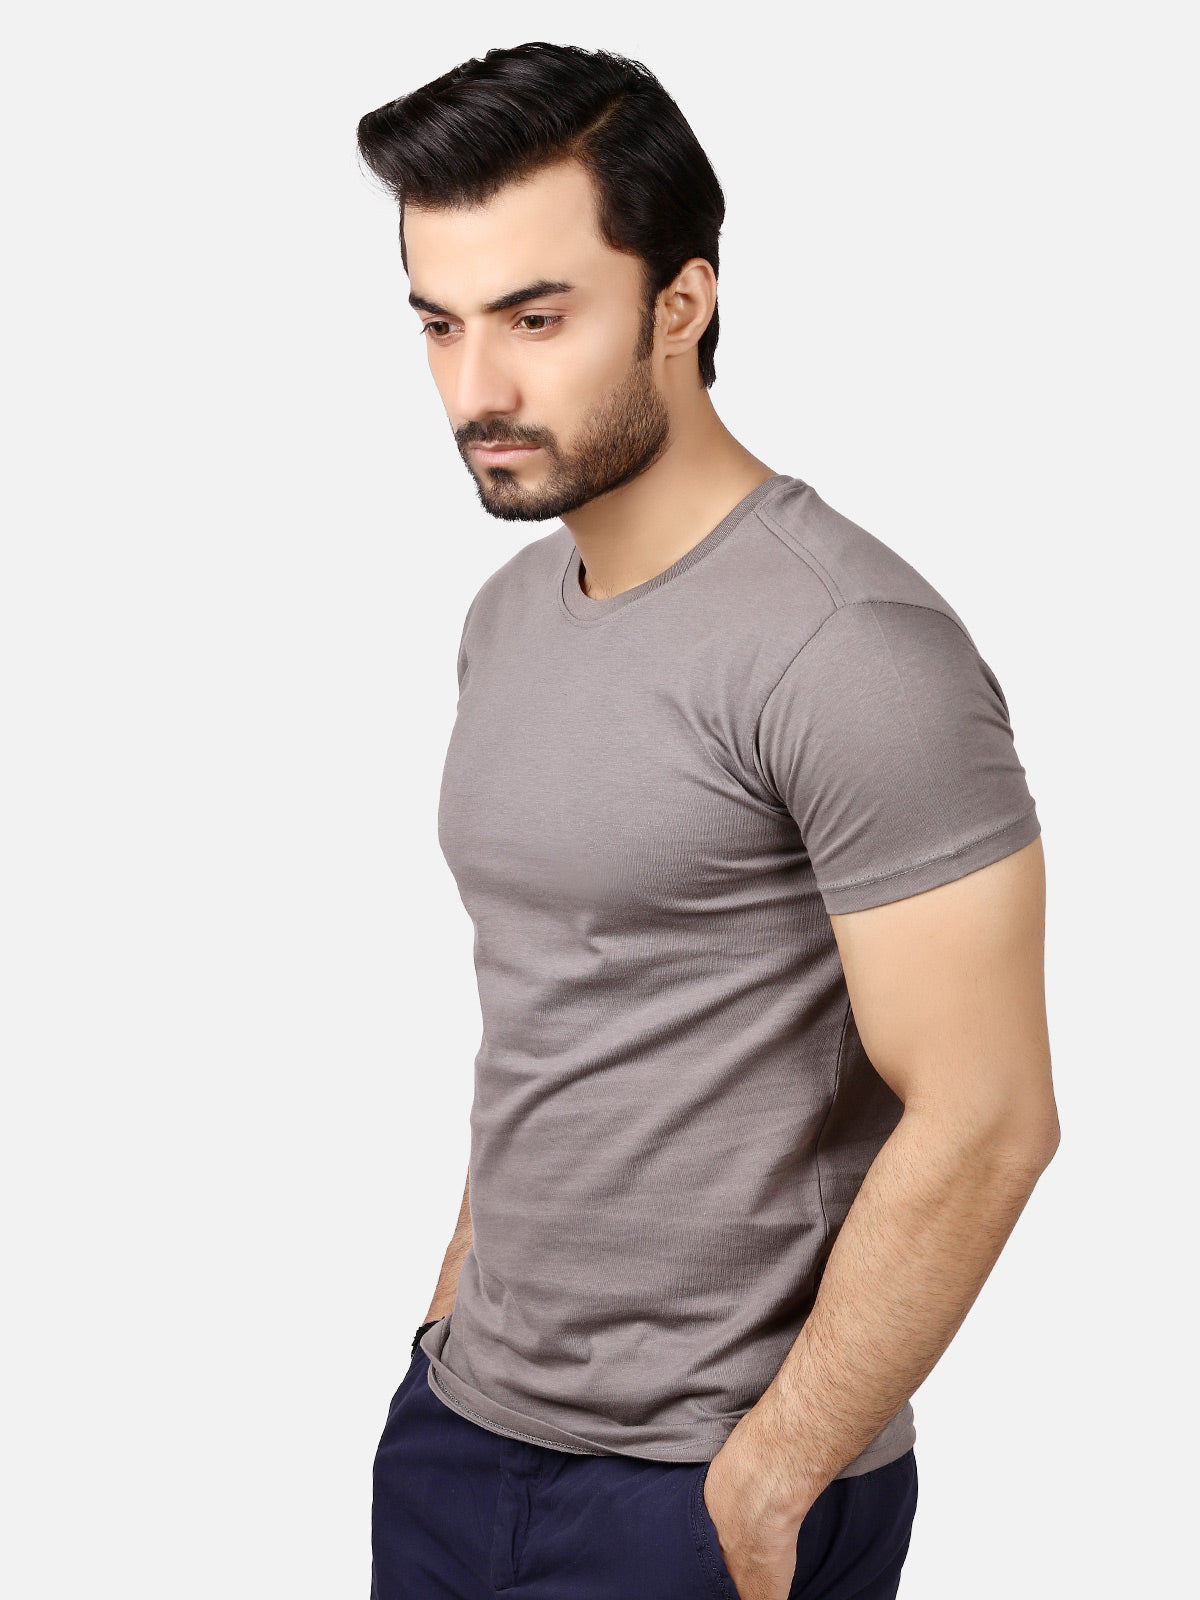 Men's Grey Basic T-Shirt - FMTBT19-019